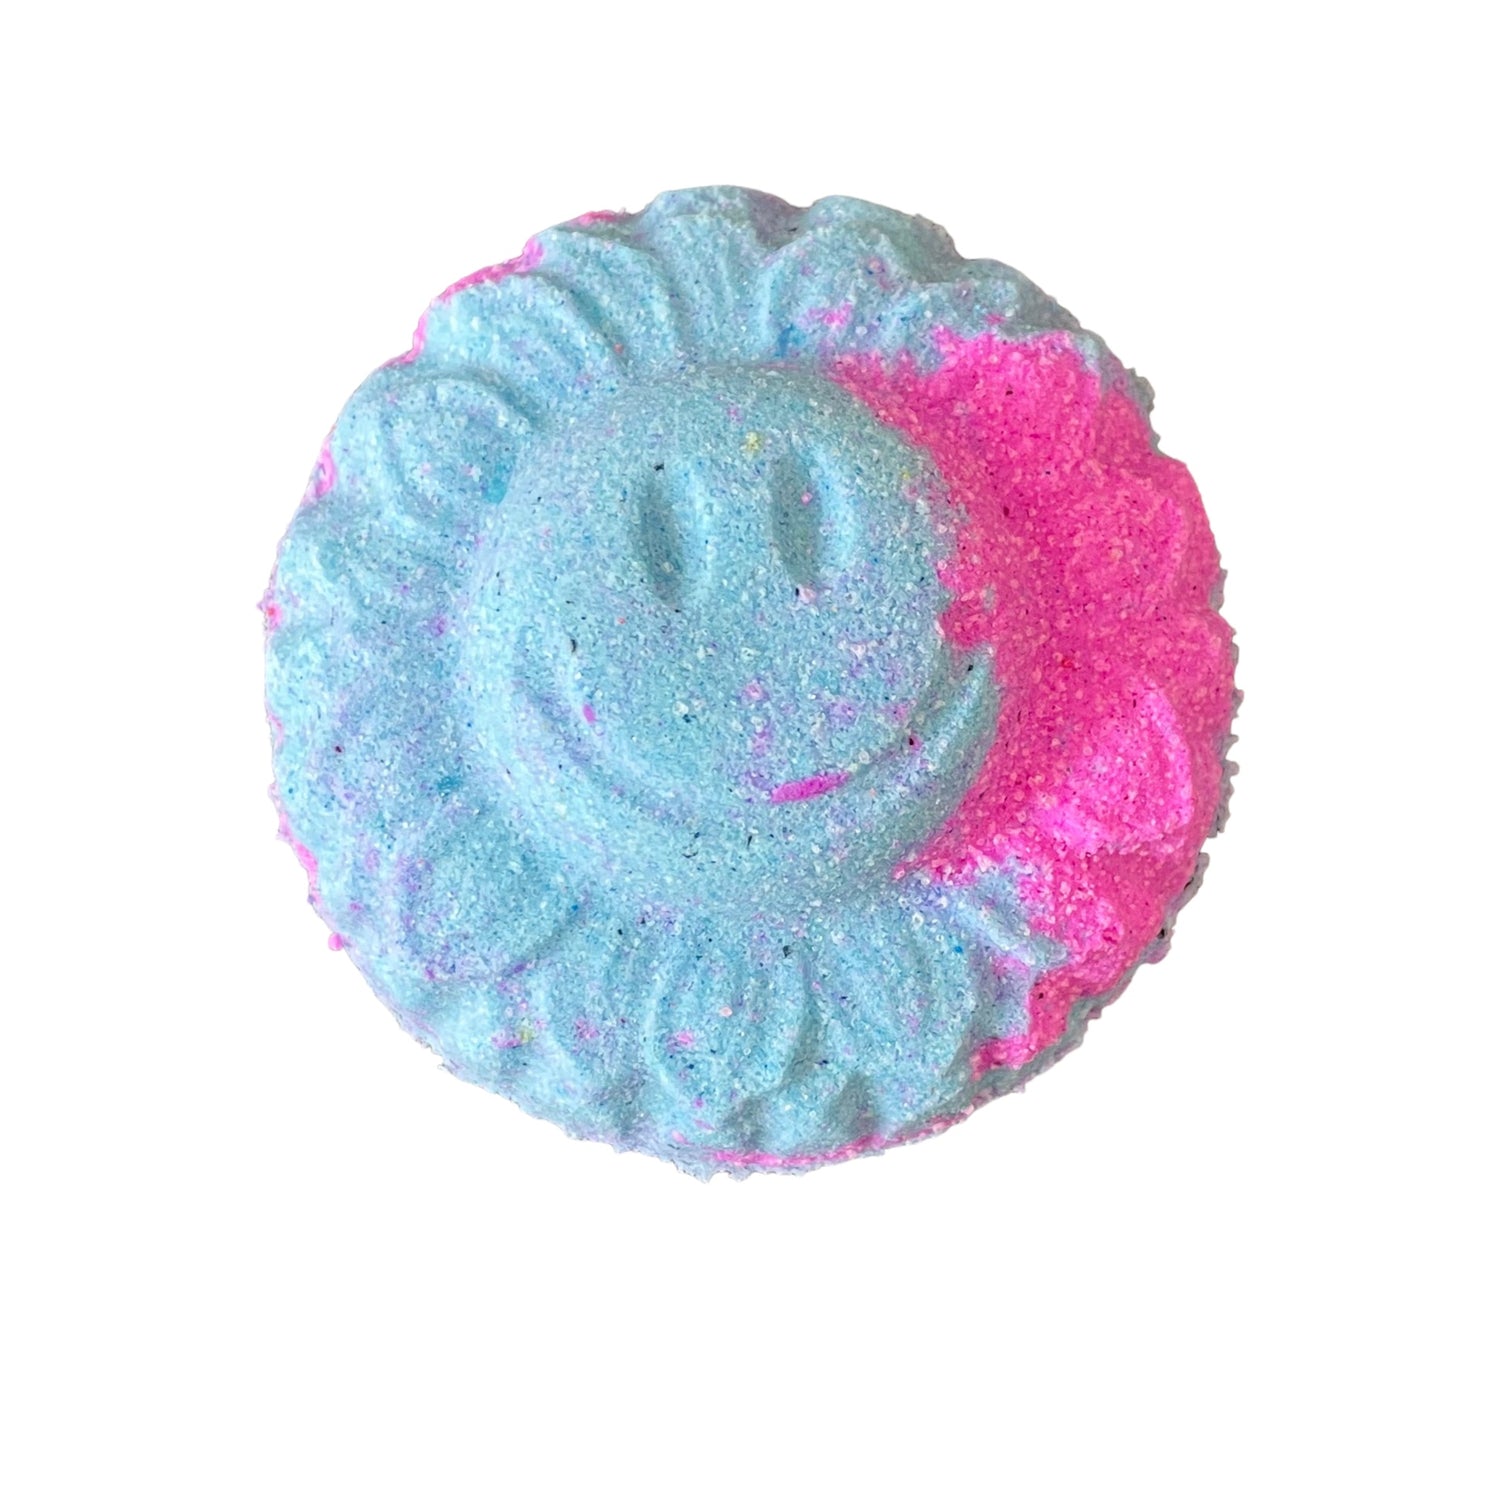 Marshmallow candy floss sunflower shaped bath bomb 